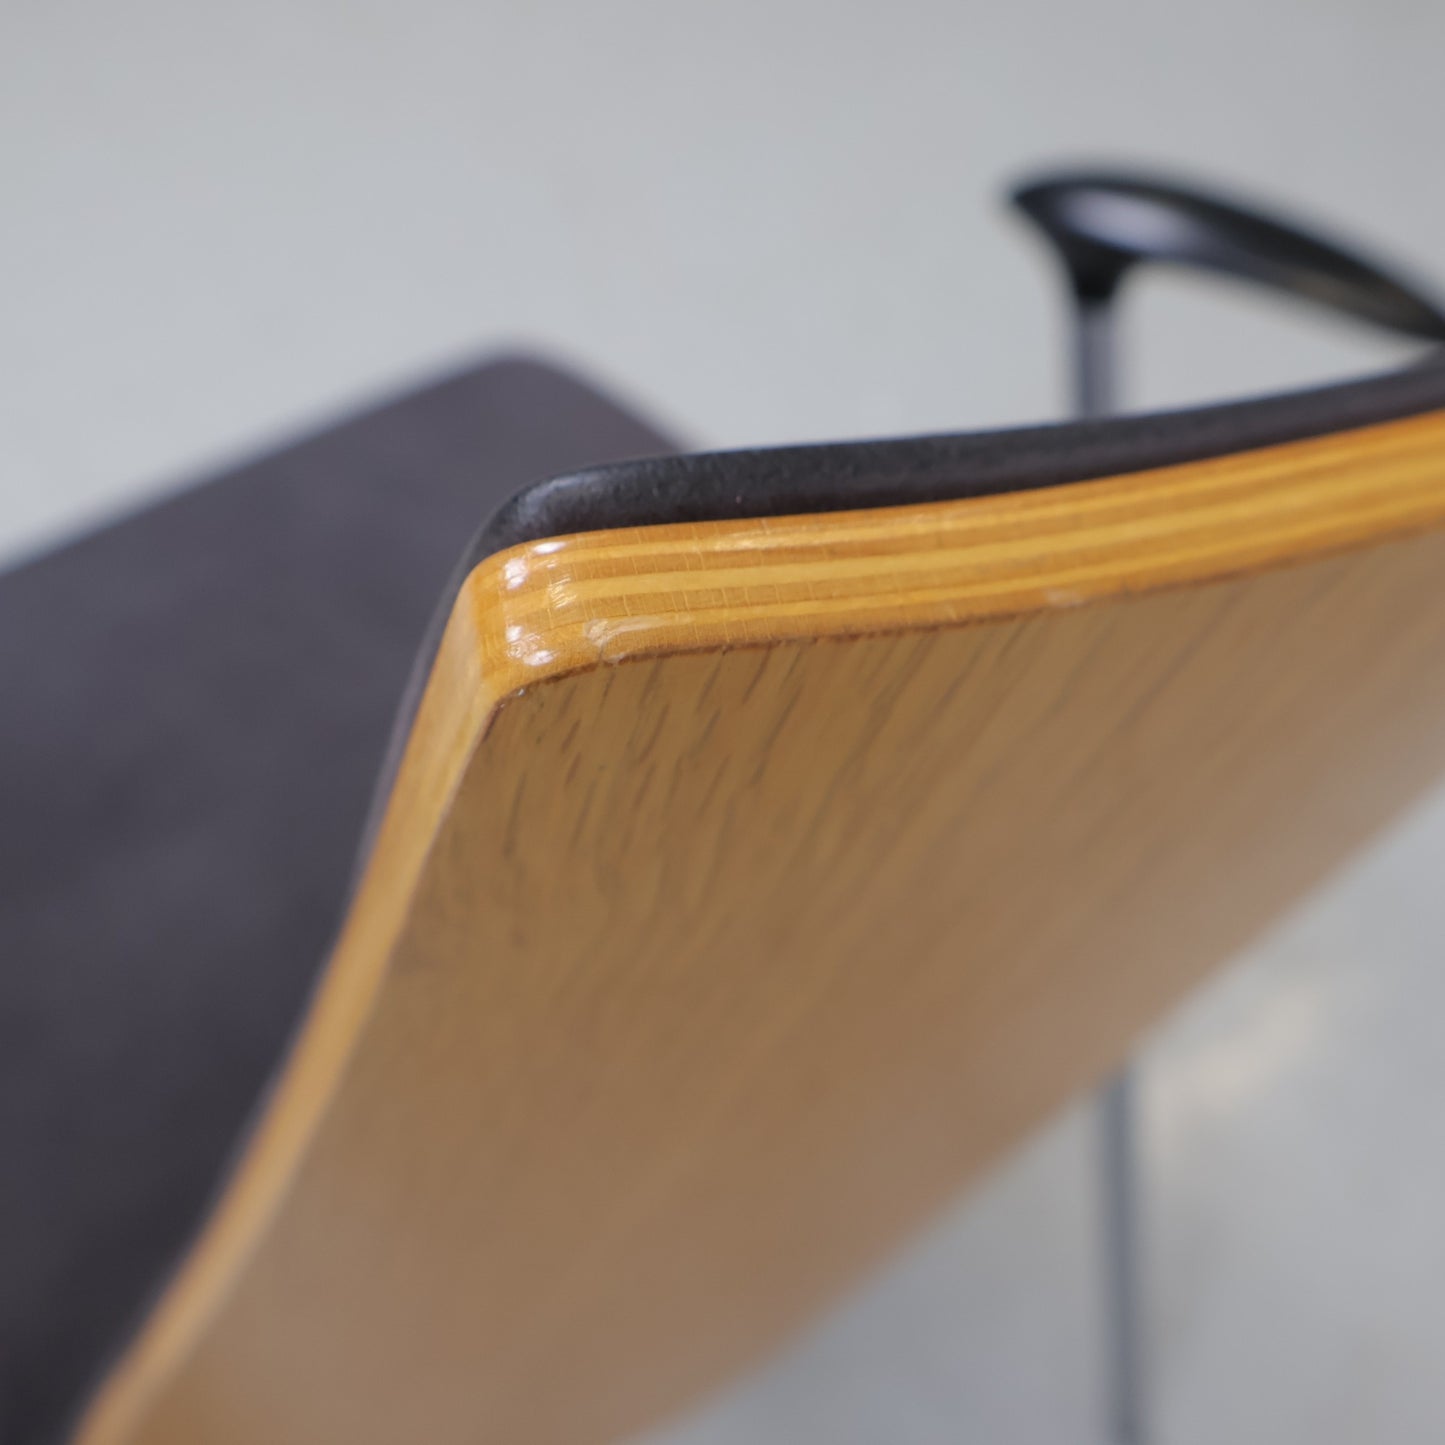 Nyrenset | Fora Form stol